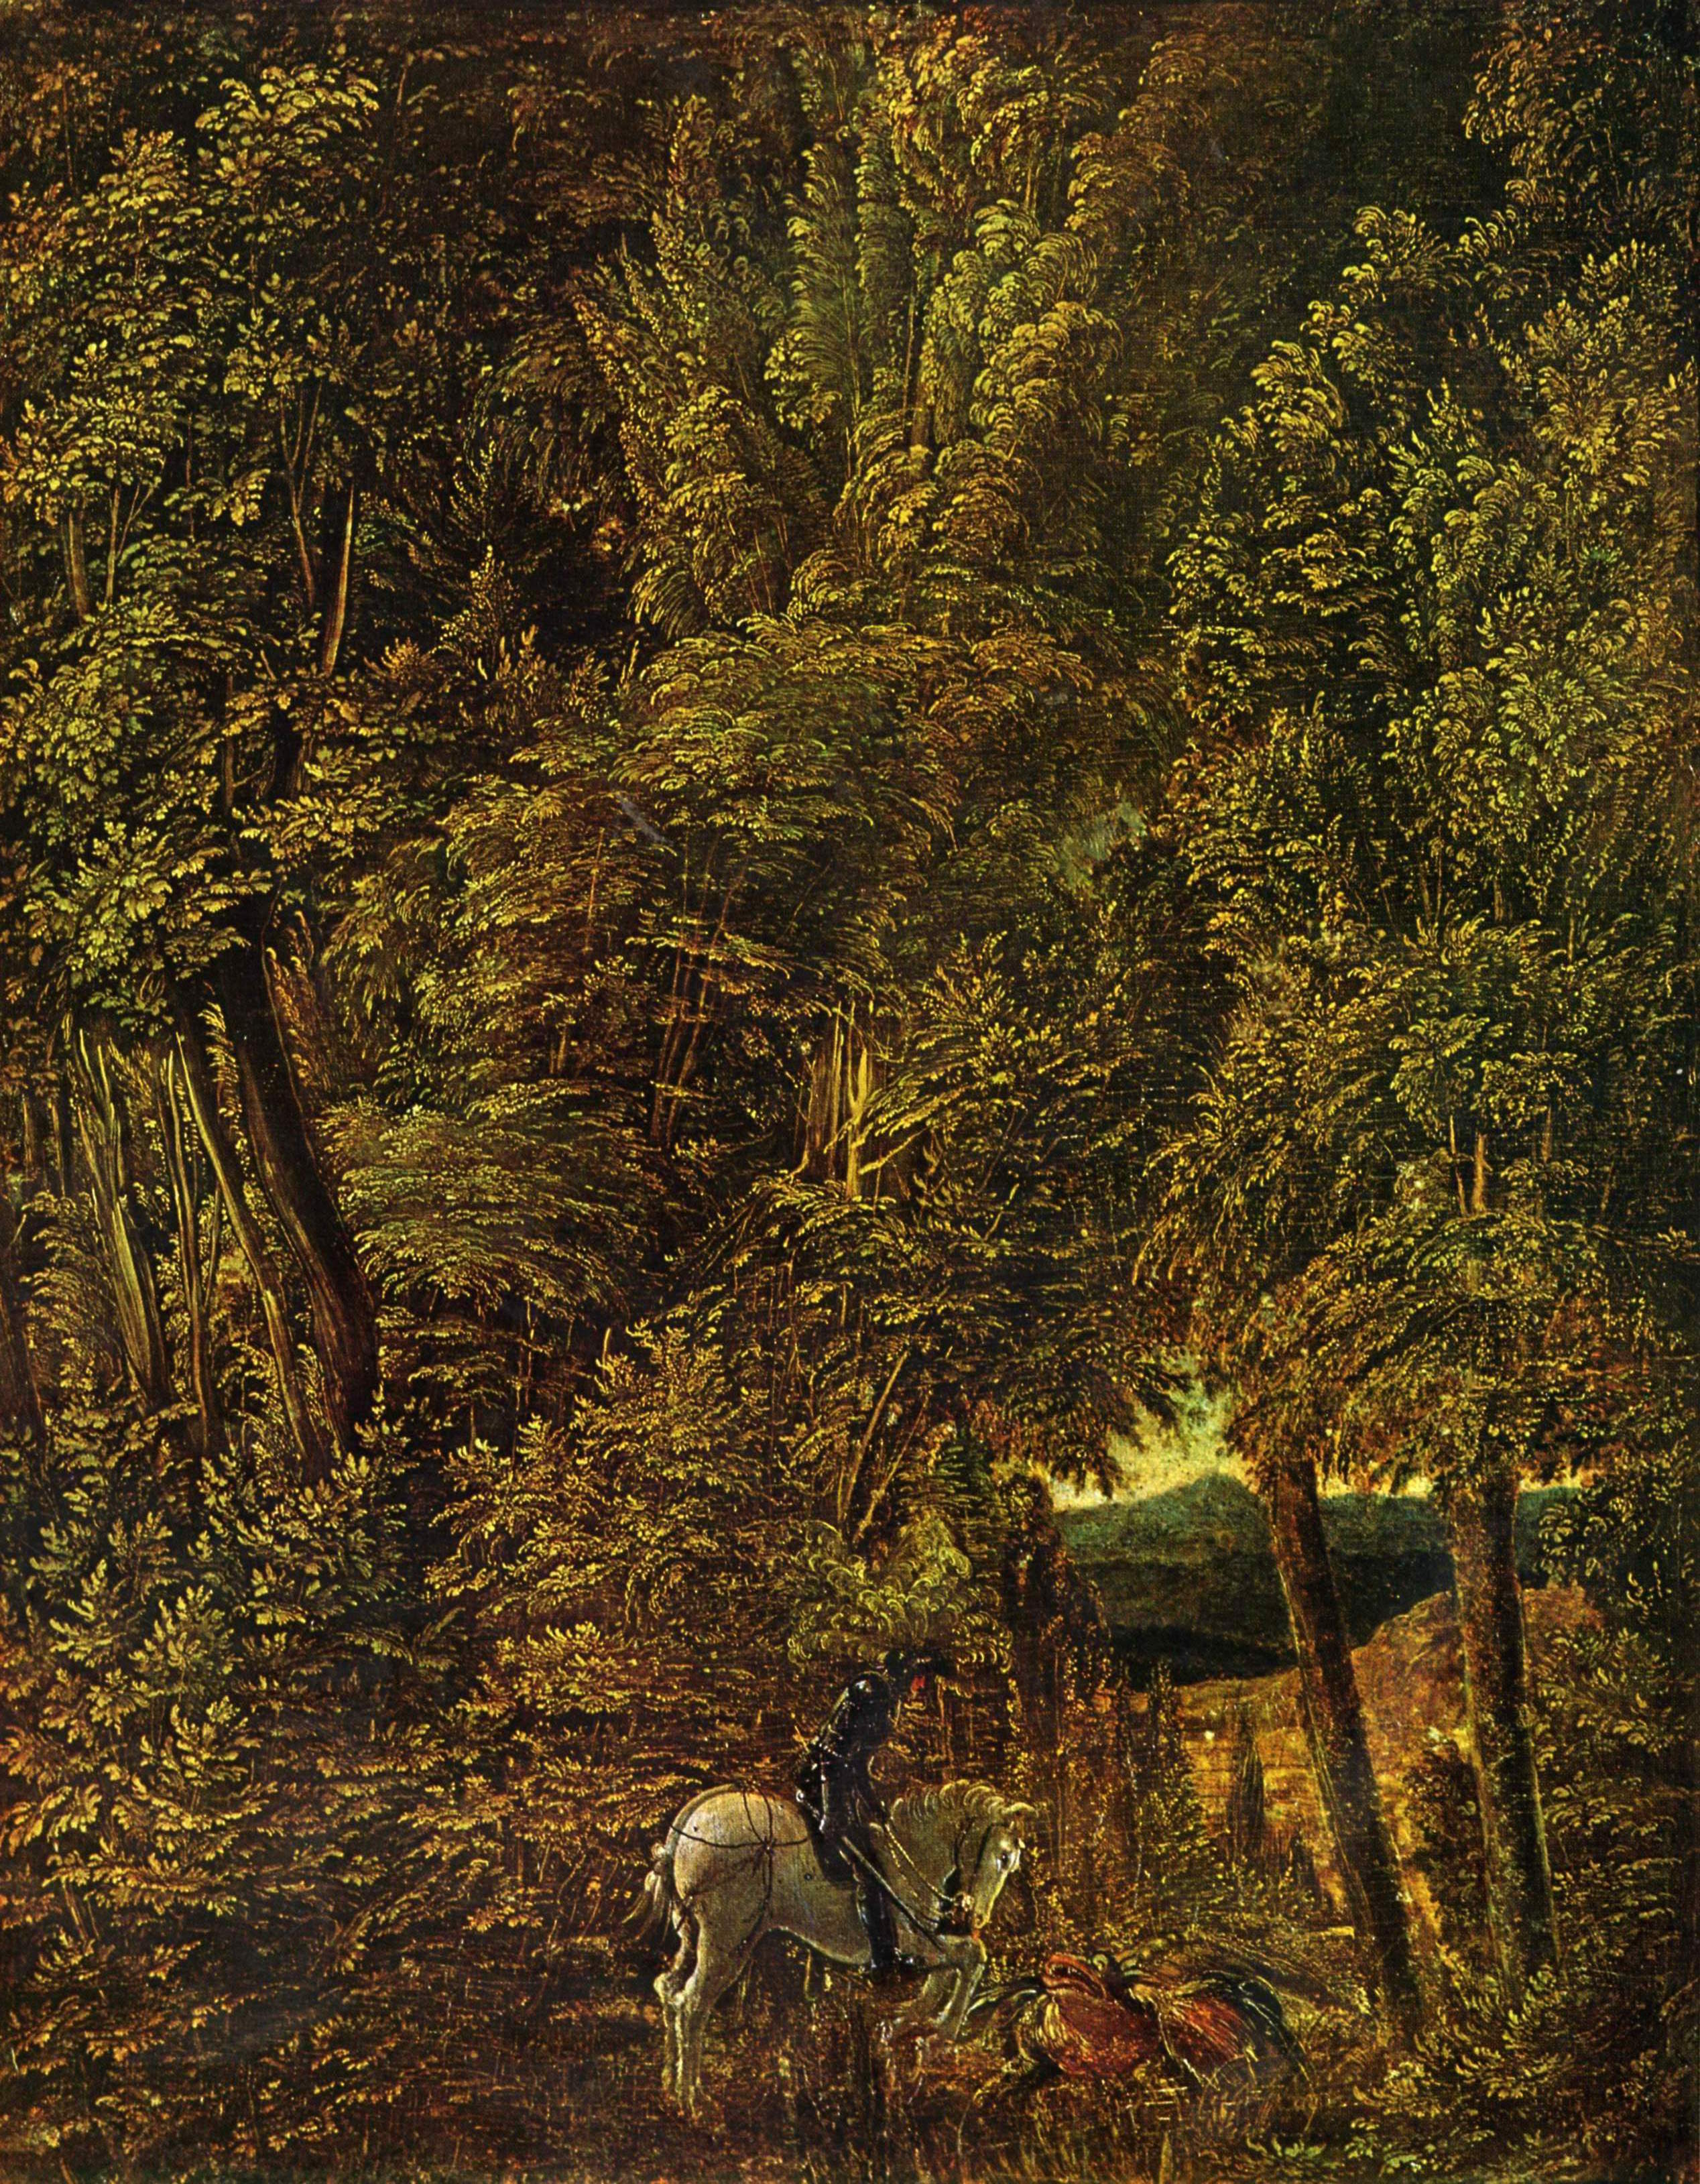 Saint George and the Dragon by Albrecht Altdorfer - 1510 - 22.5 x 28 cm Alte Pinakothek